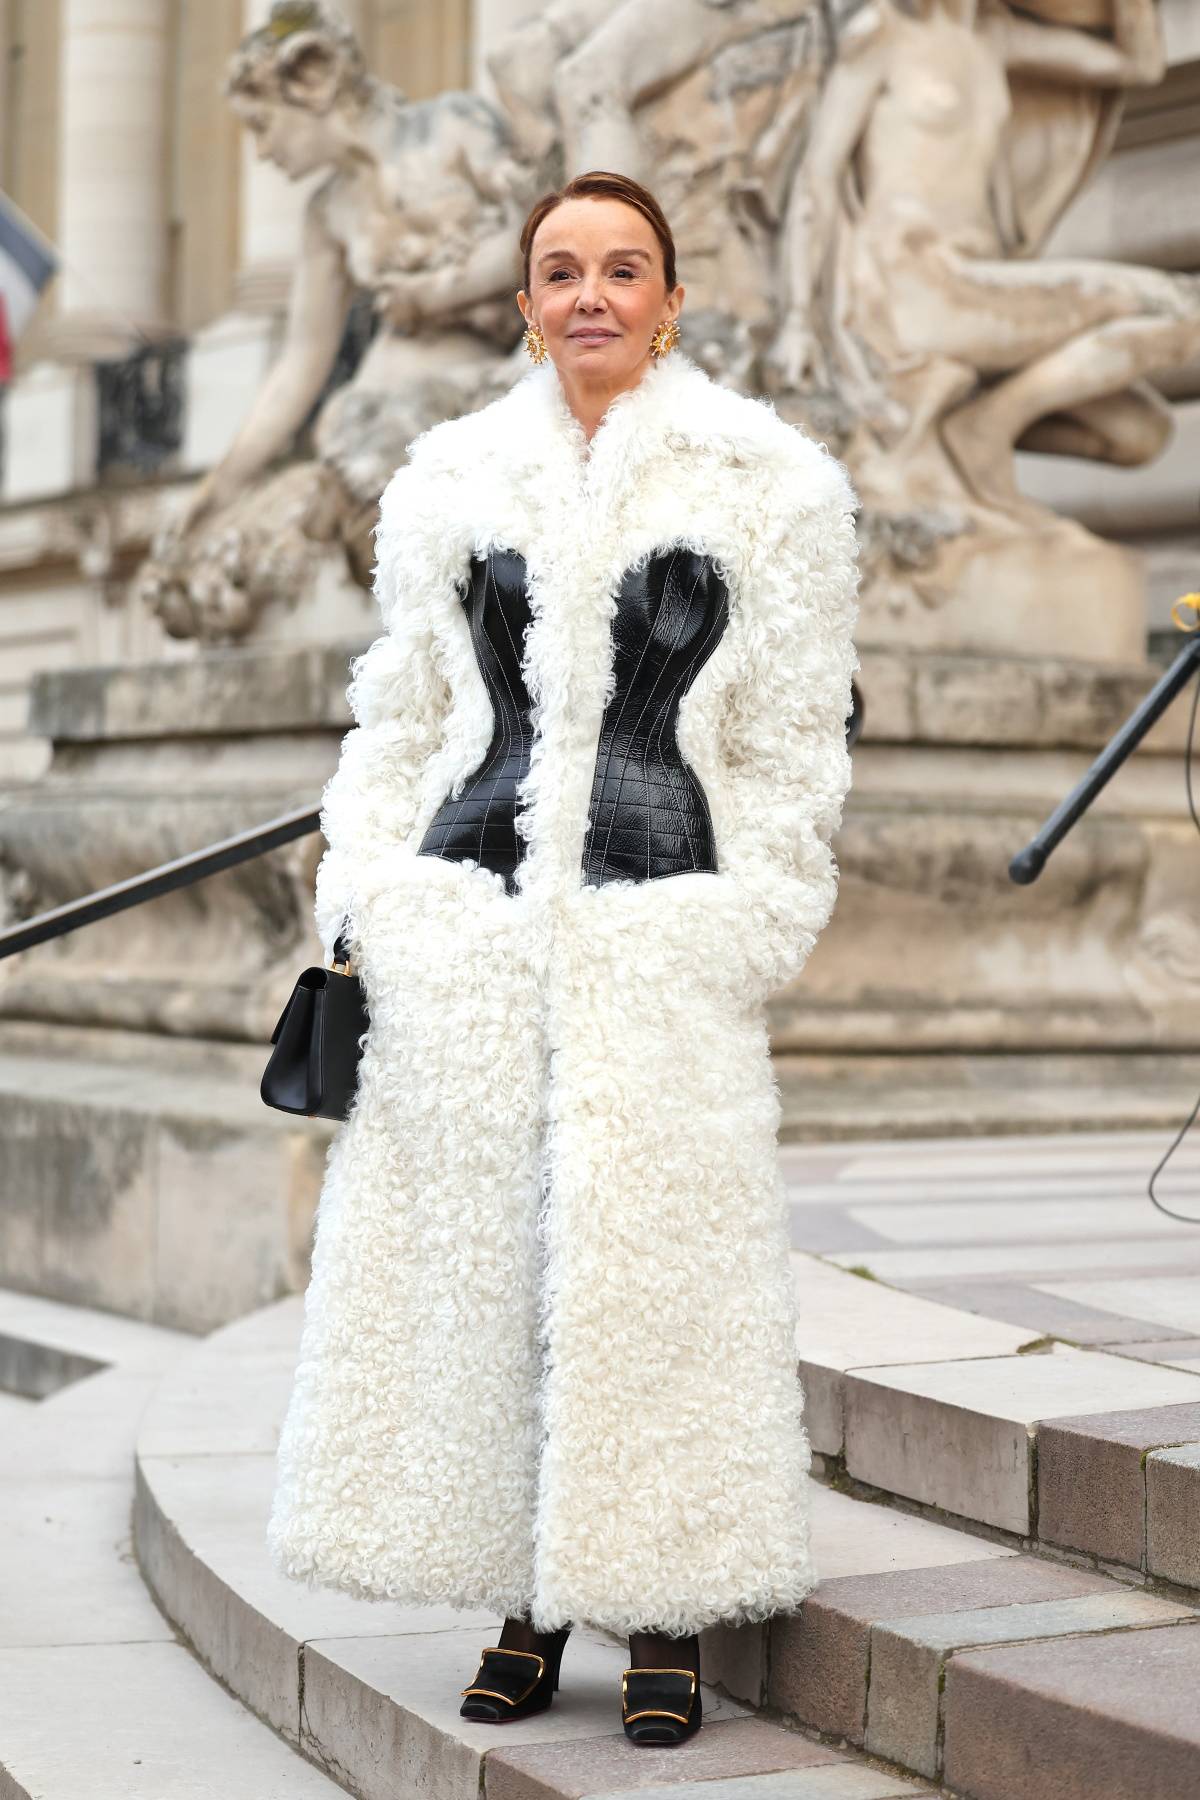 Philippine Leroy-Beaulieu na pokazie Schiaparelli Haute Couture w Paryżu. (Fot. Getty Images)